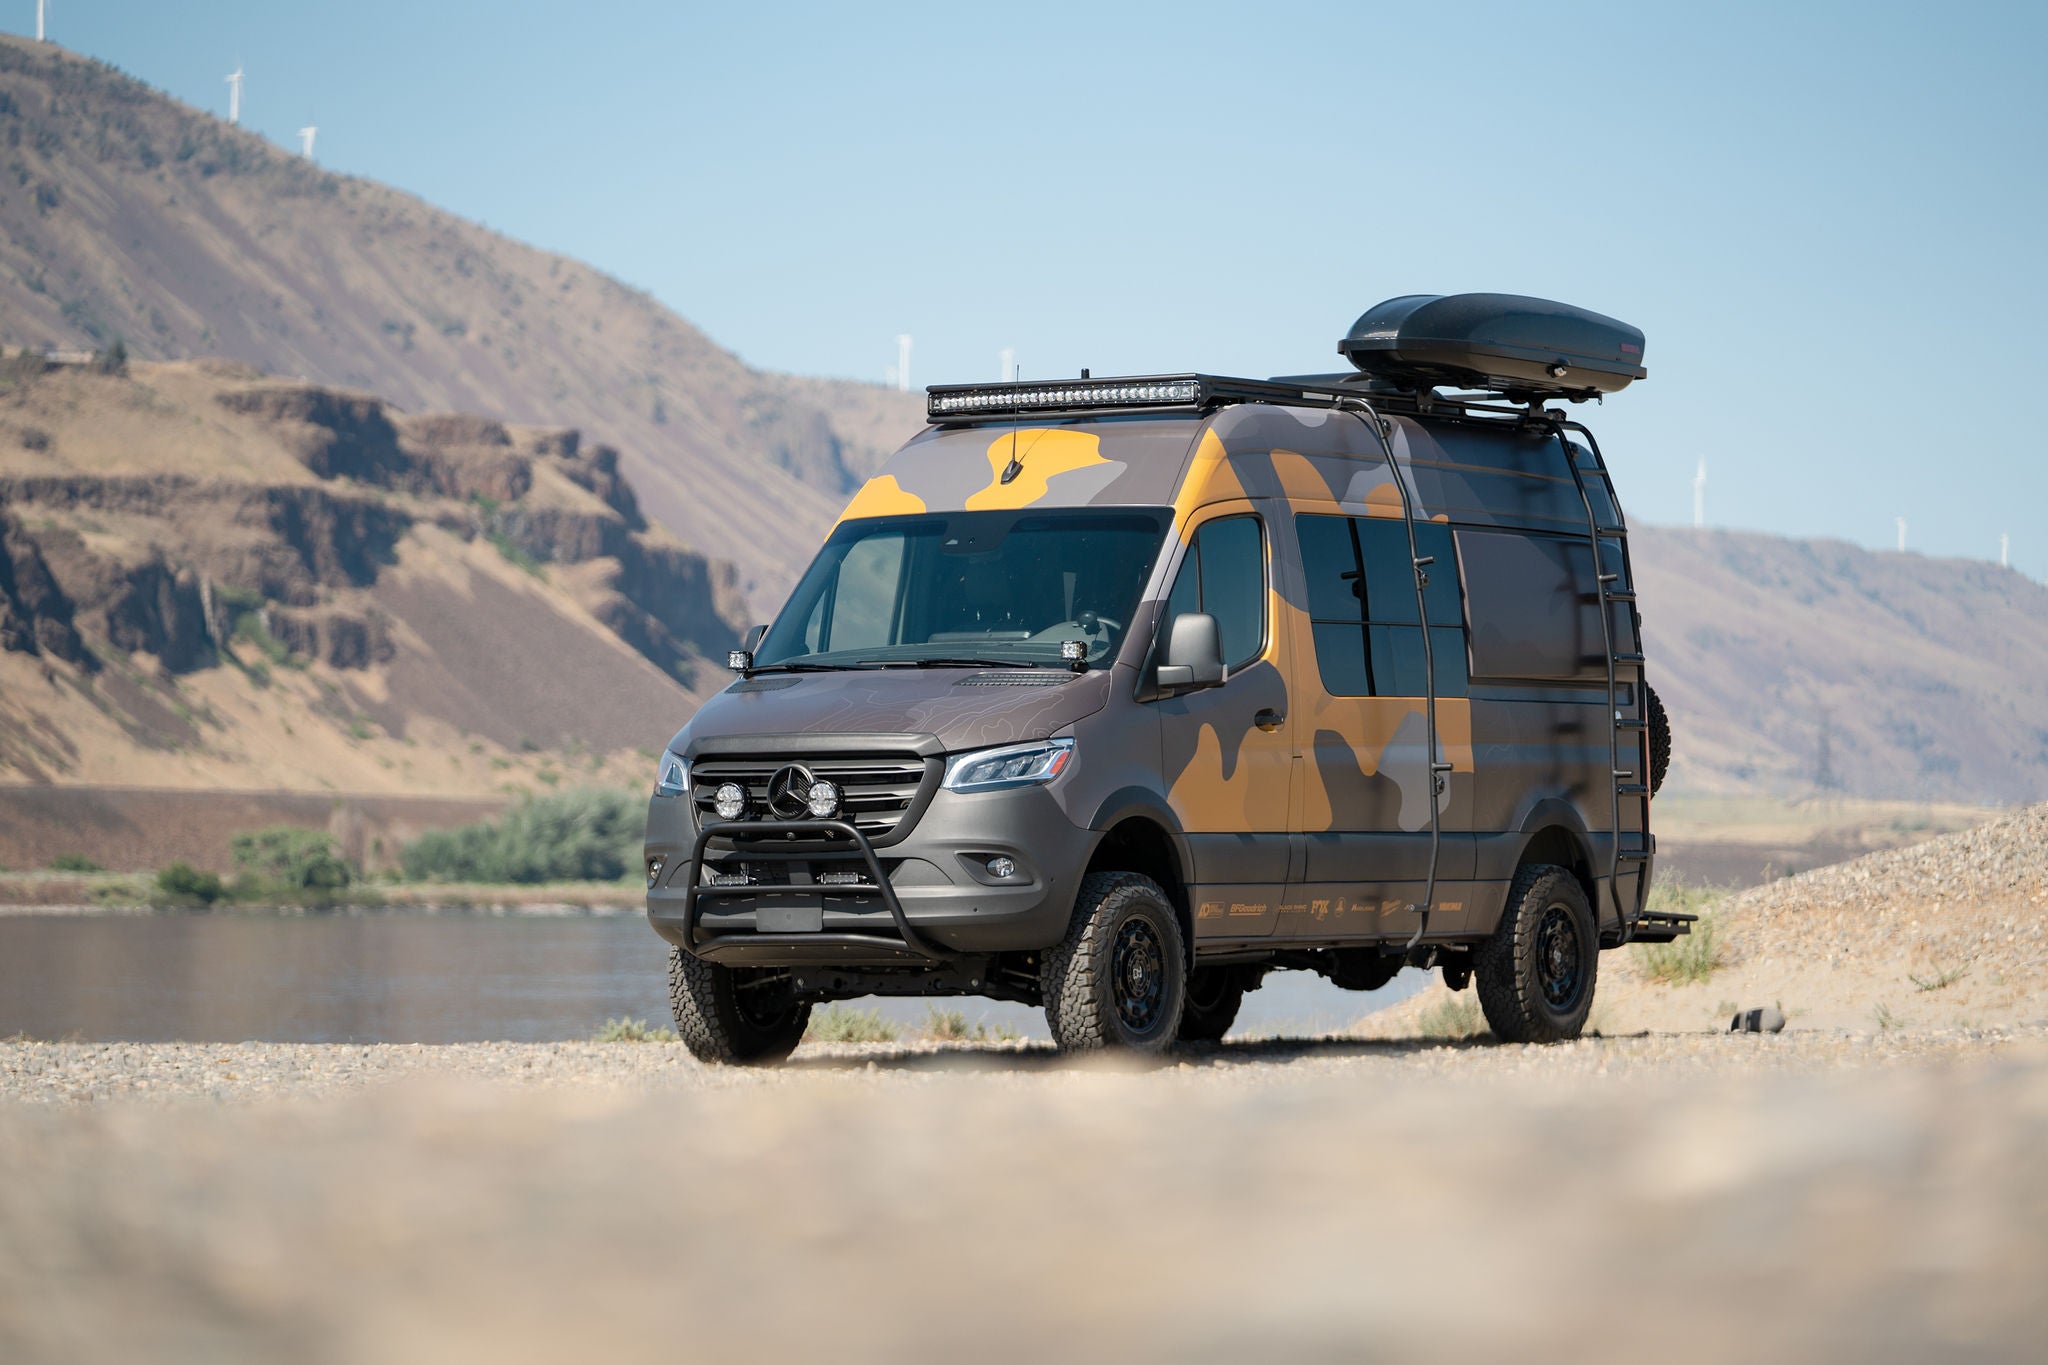 RUX Rides: Outside Van's "Slim Chance" | The Ultimate Wind Sports Adventure Van